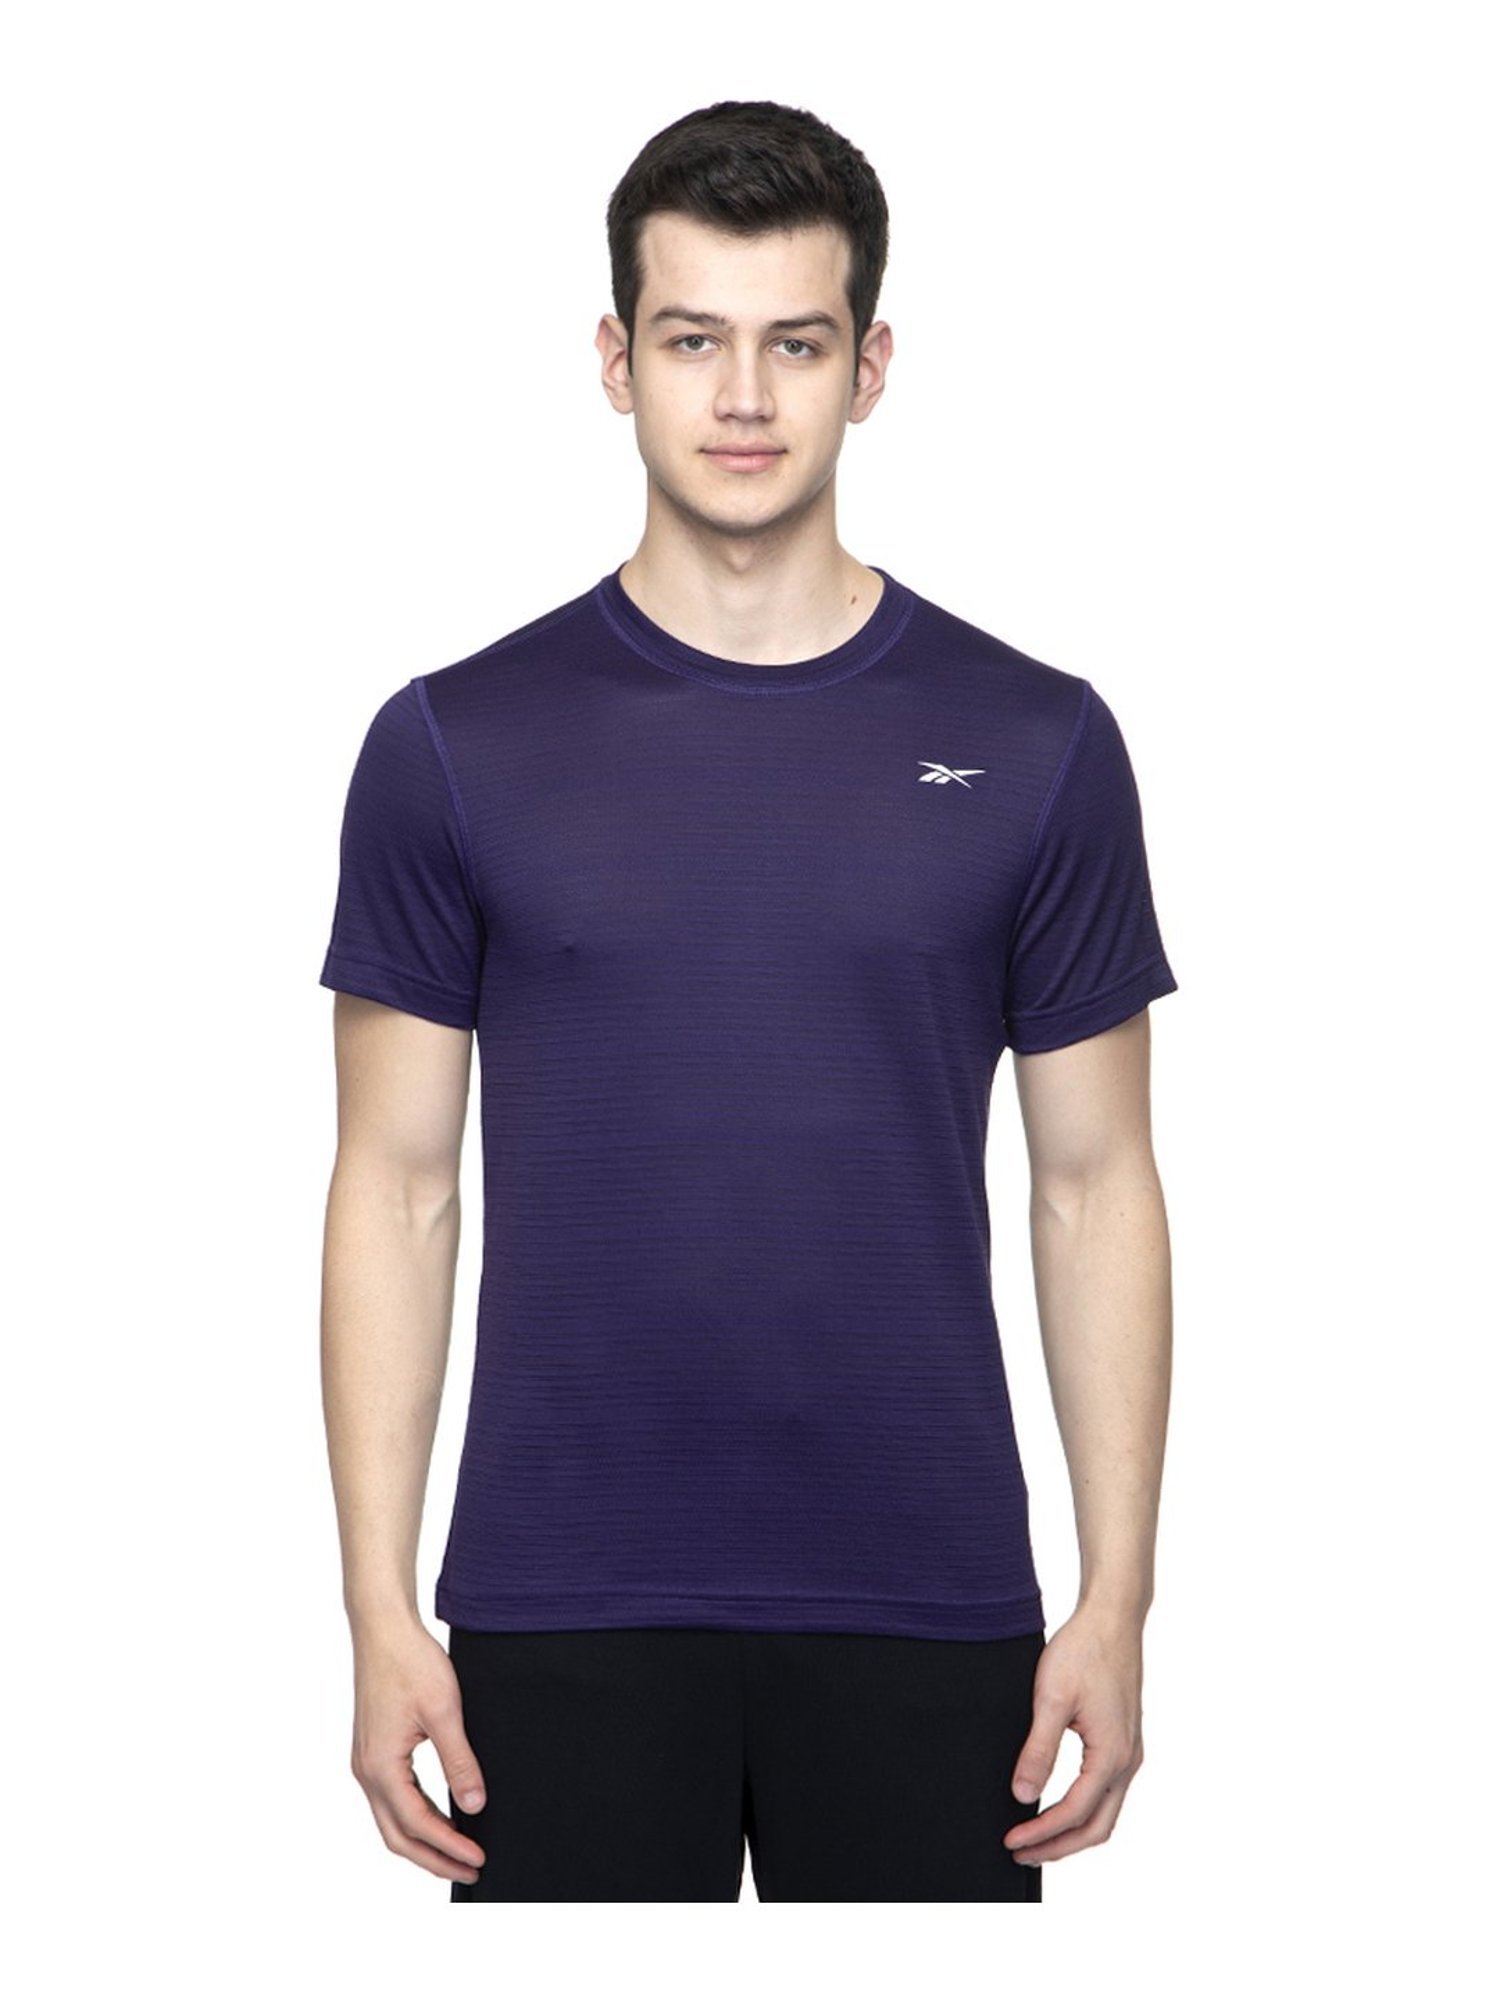 Reebok Men's Shirt - Purple - XXL